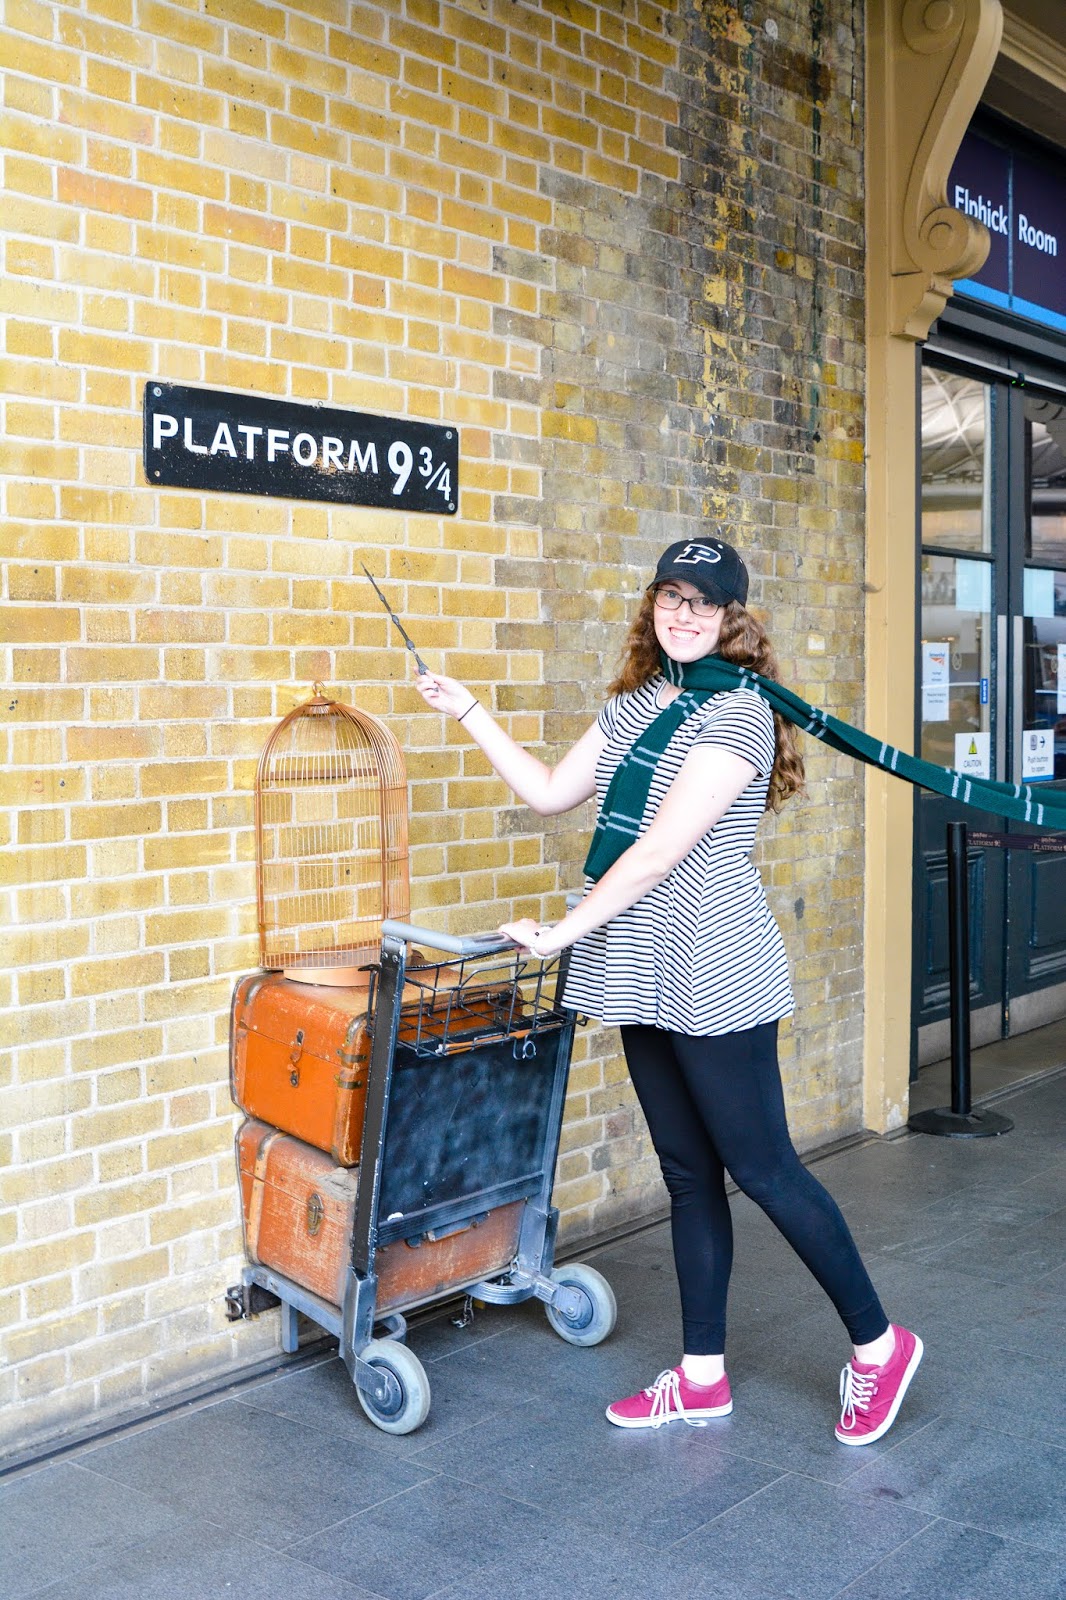 Harry Potter King's Cross Station